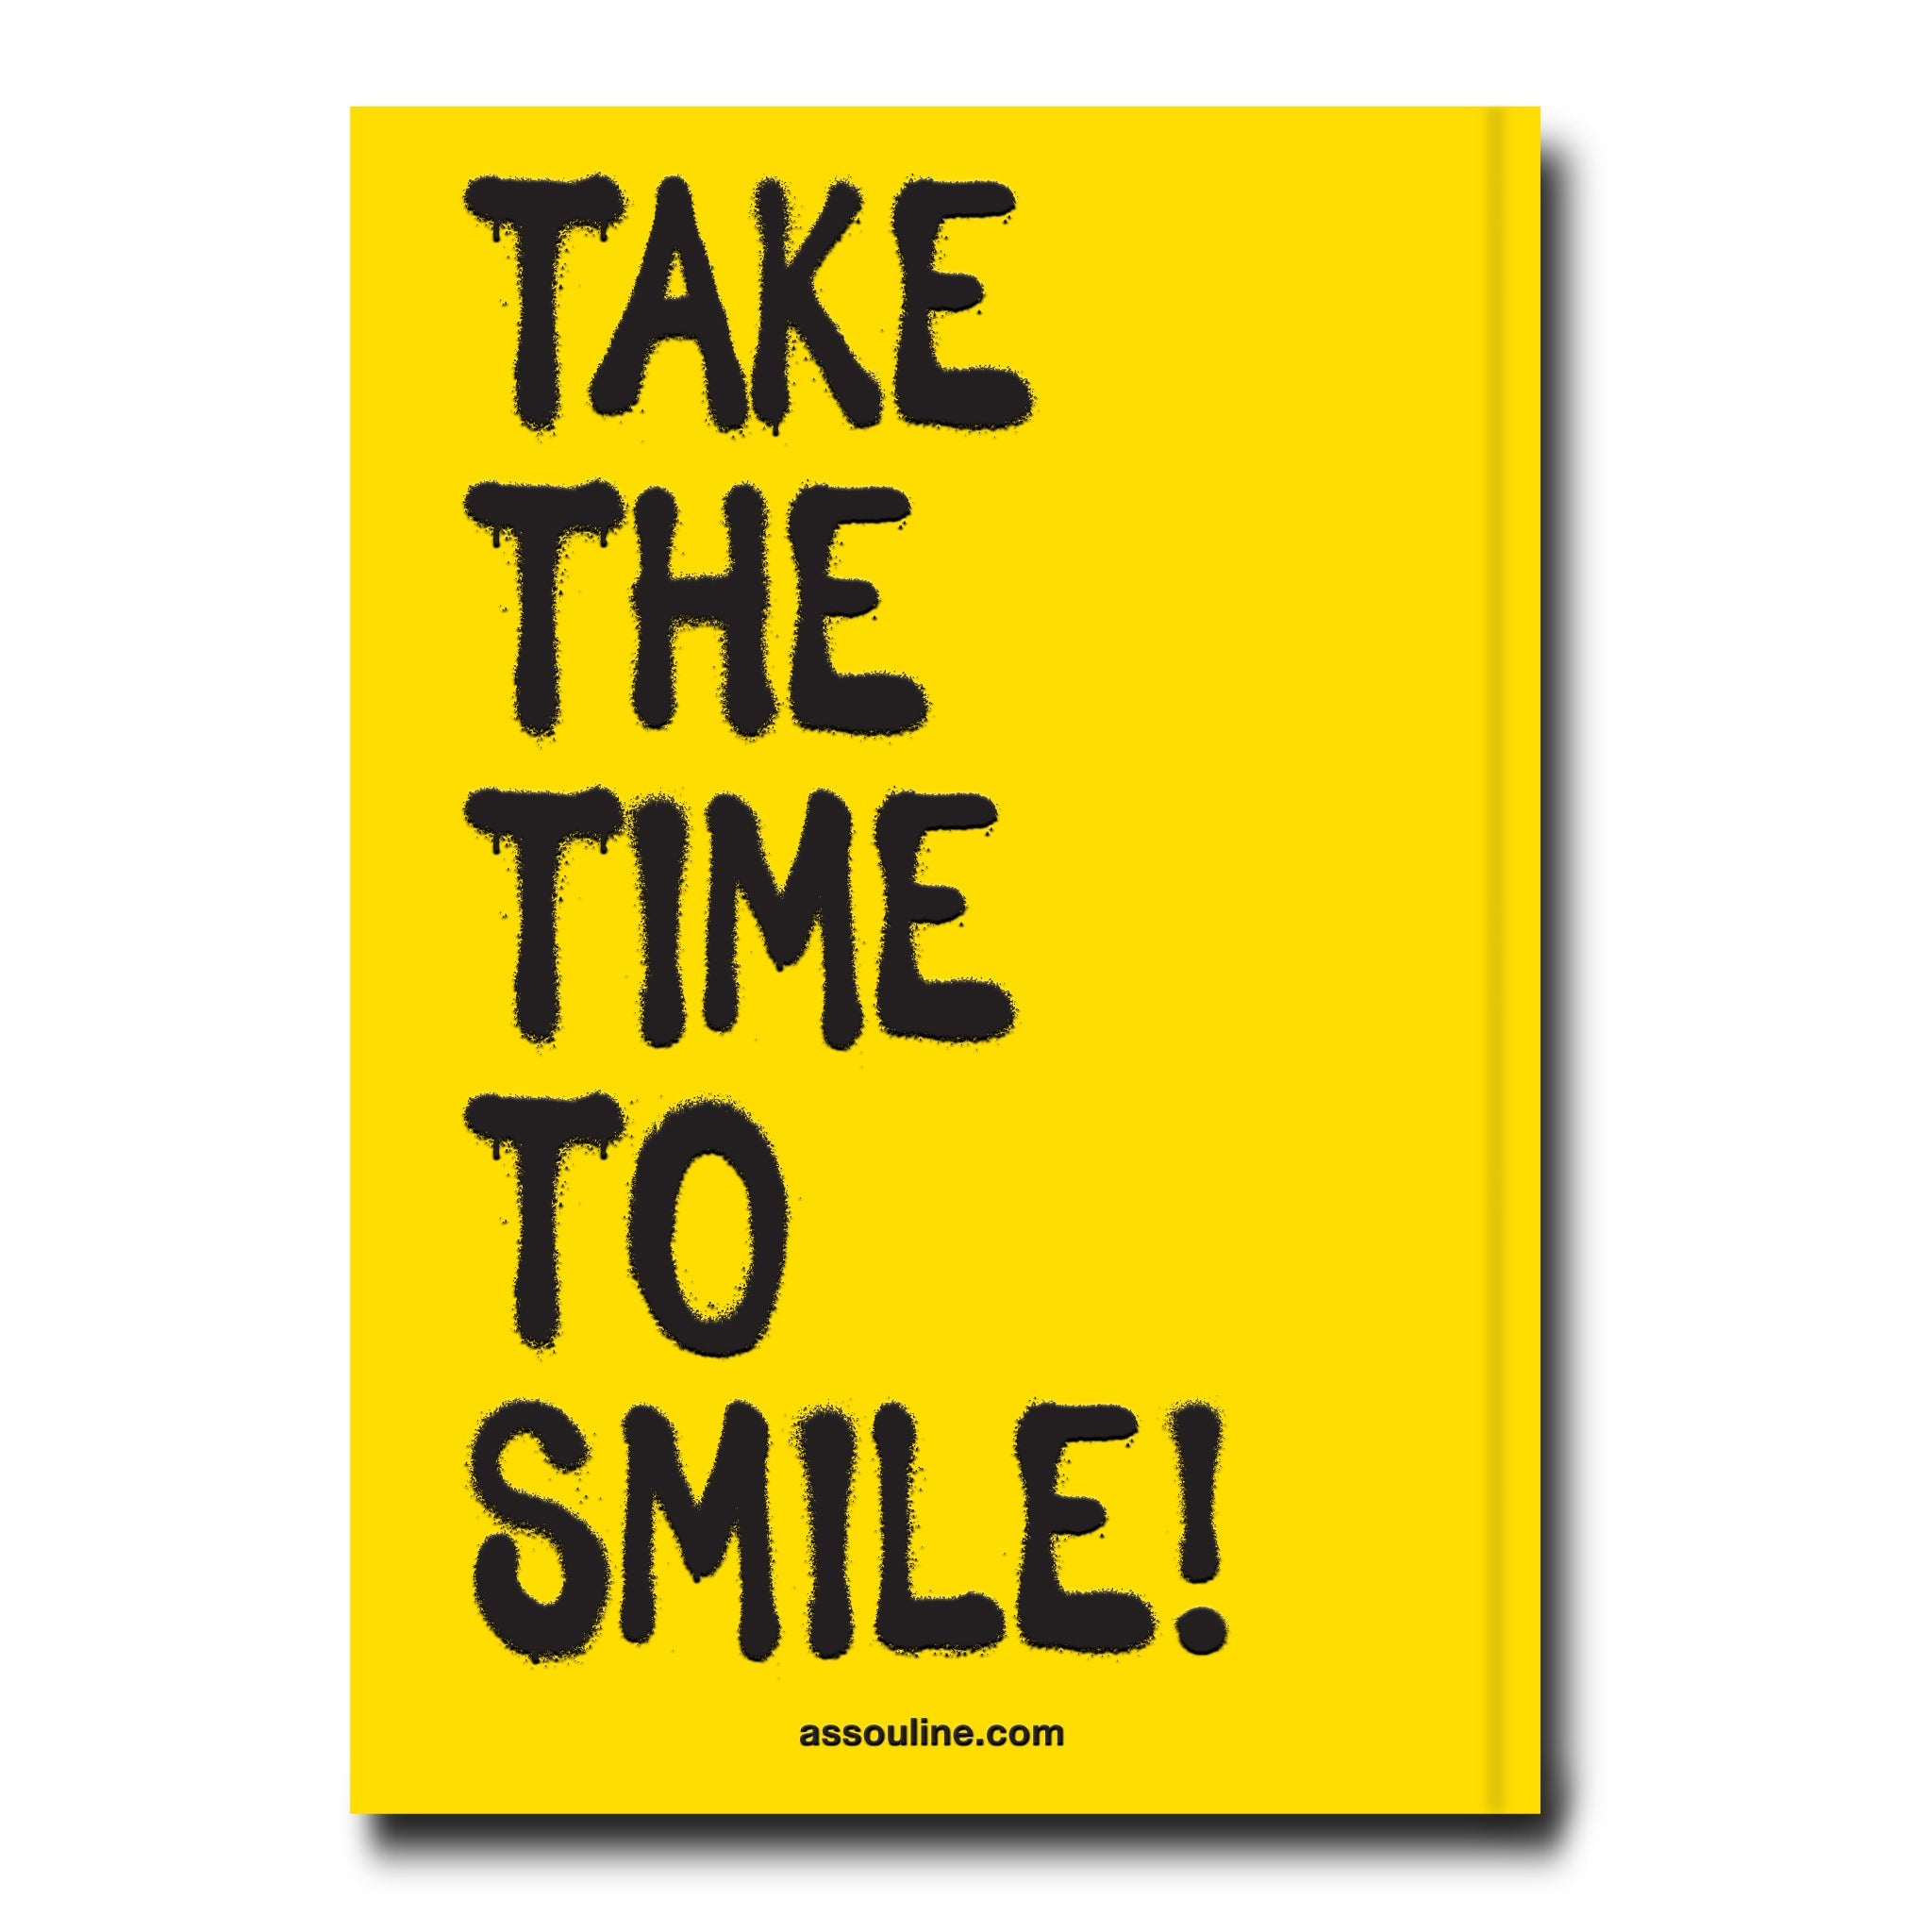 Smiley: Good News Travel Book - Joy